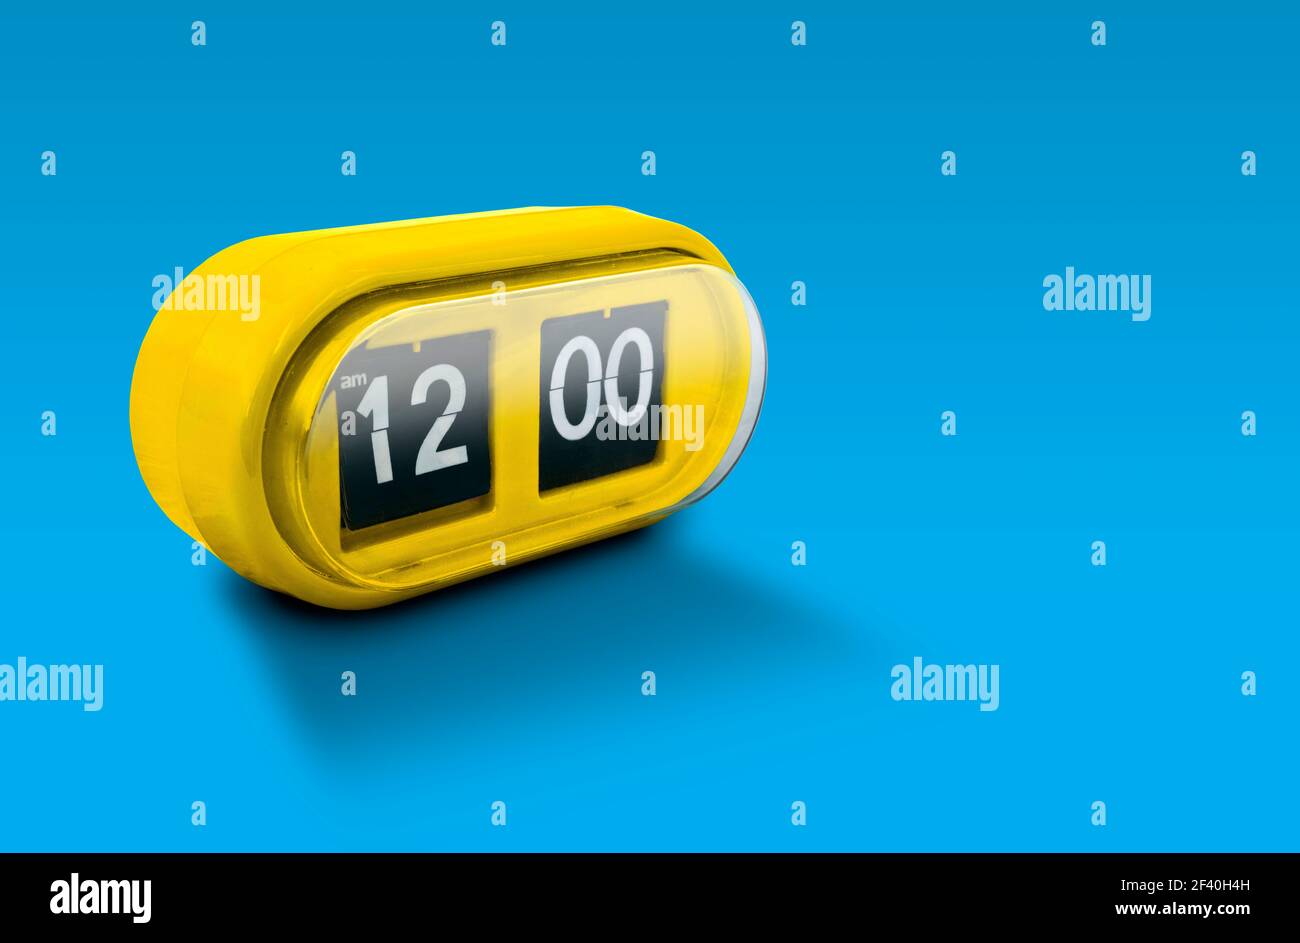 Yellow alarm clock isolated on blue background Stock Photo